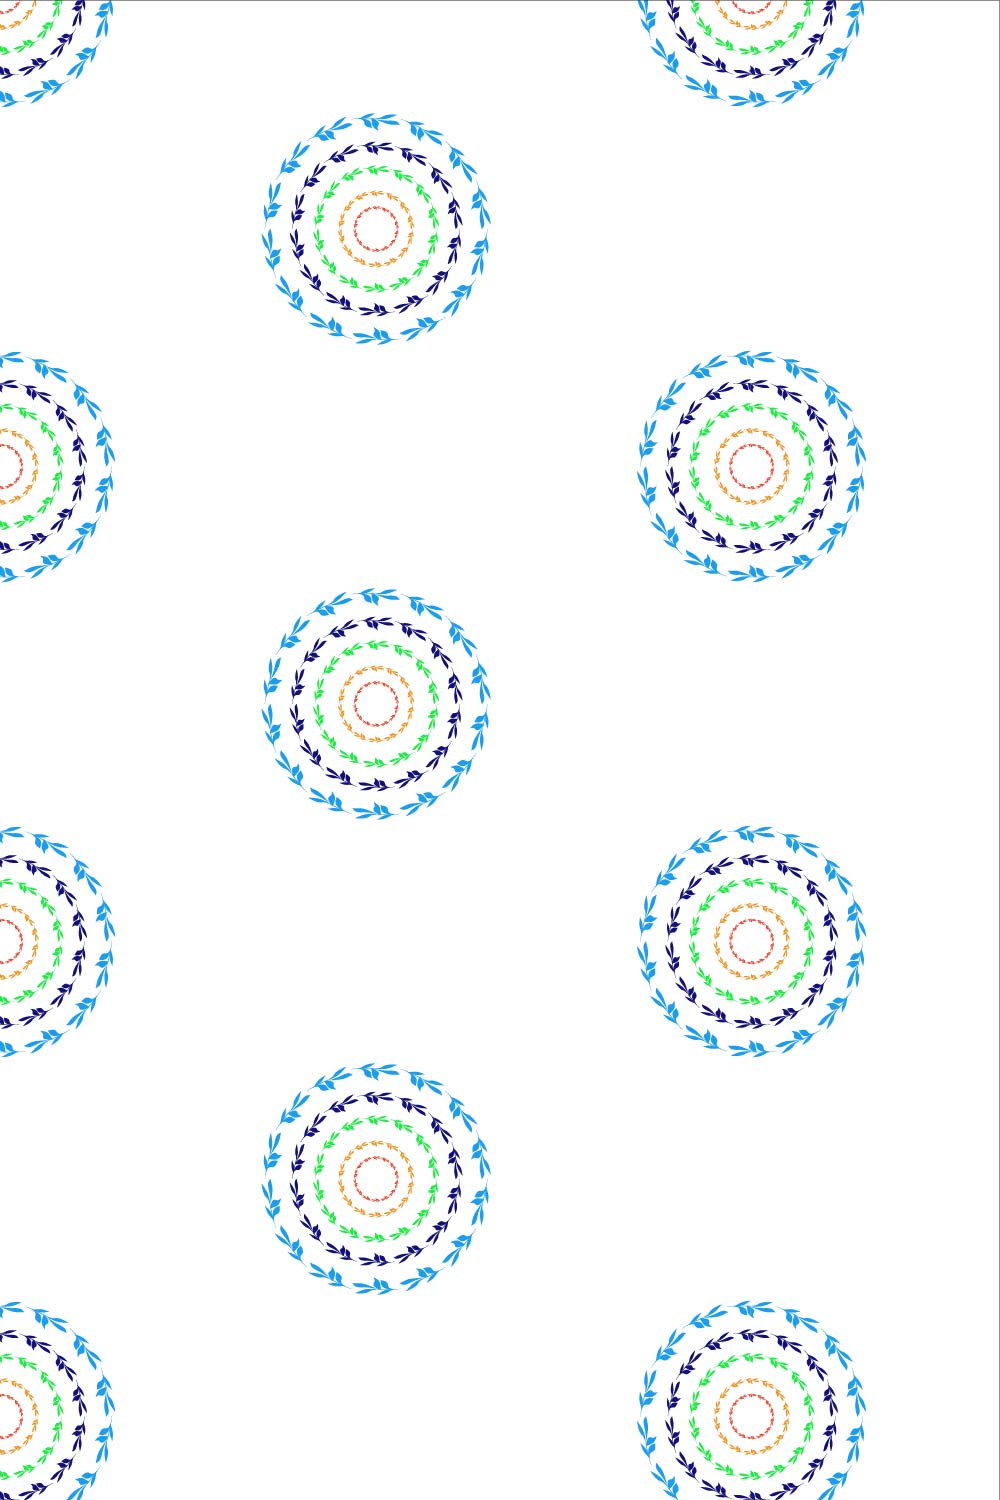 Circle Geometric Pattern Design pinterest image.